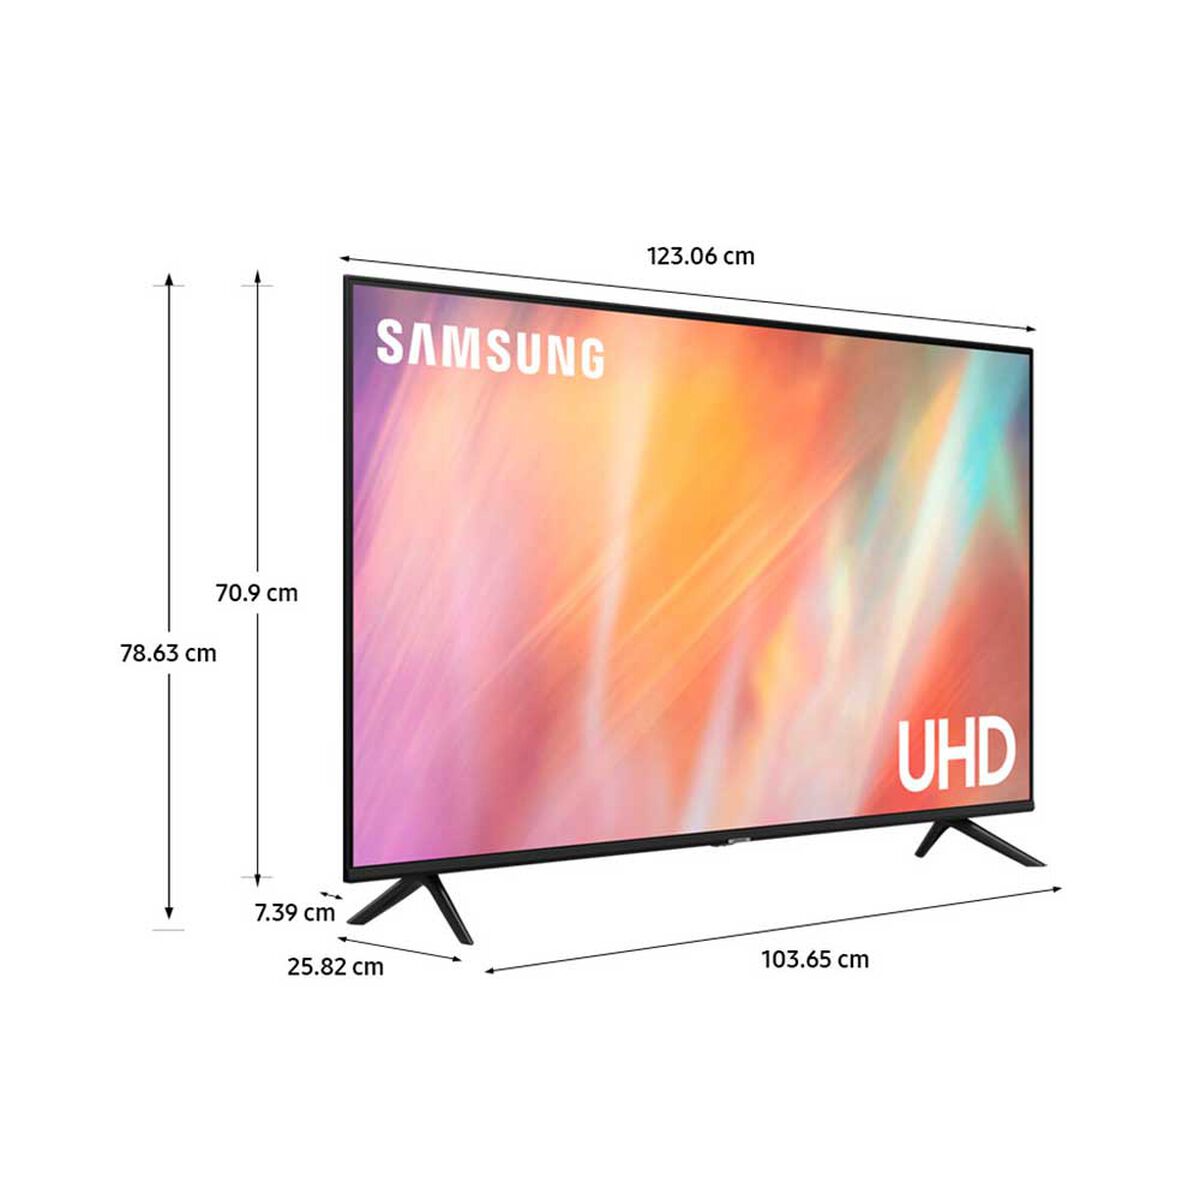 LED 55" Samsung UN55AU7090 Smart TV 4K Ultra HD